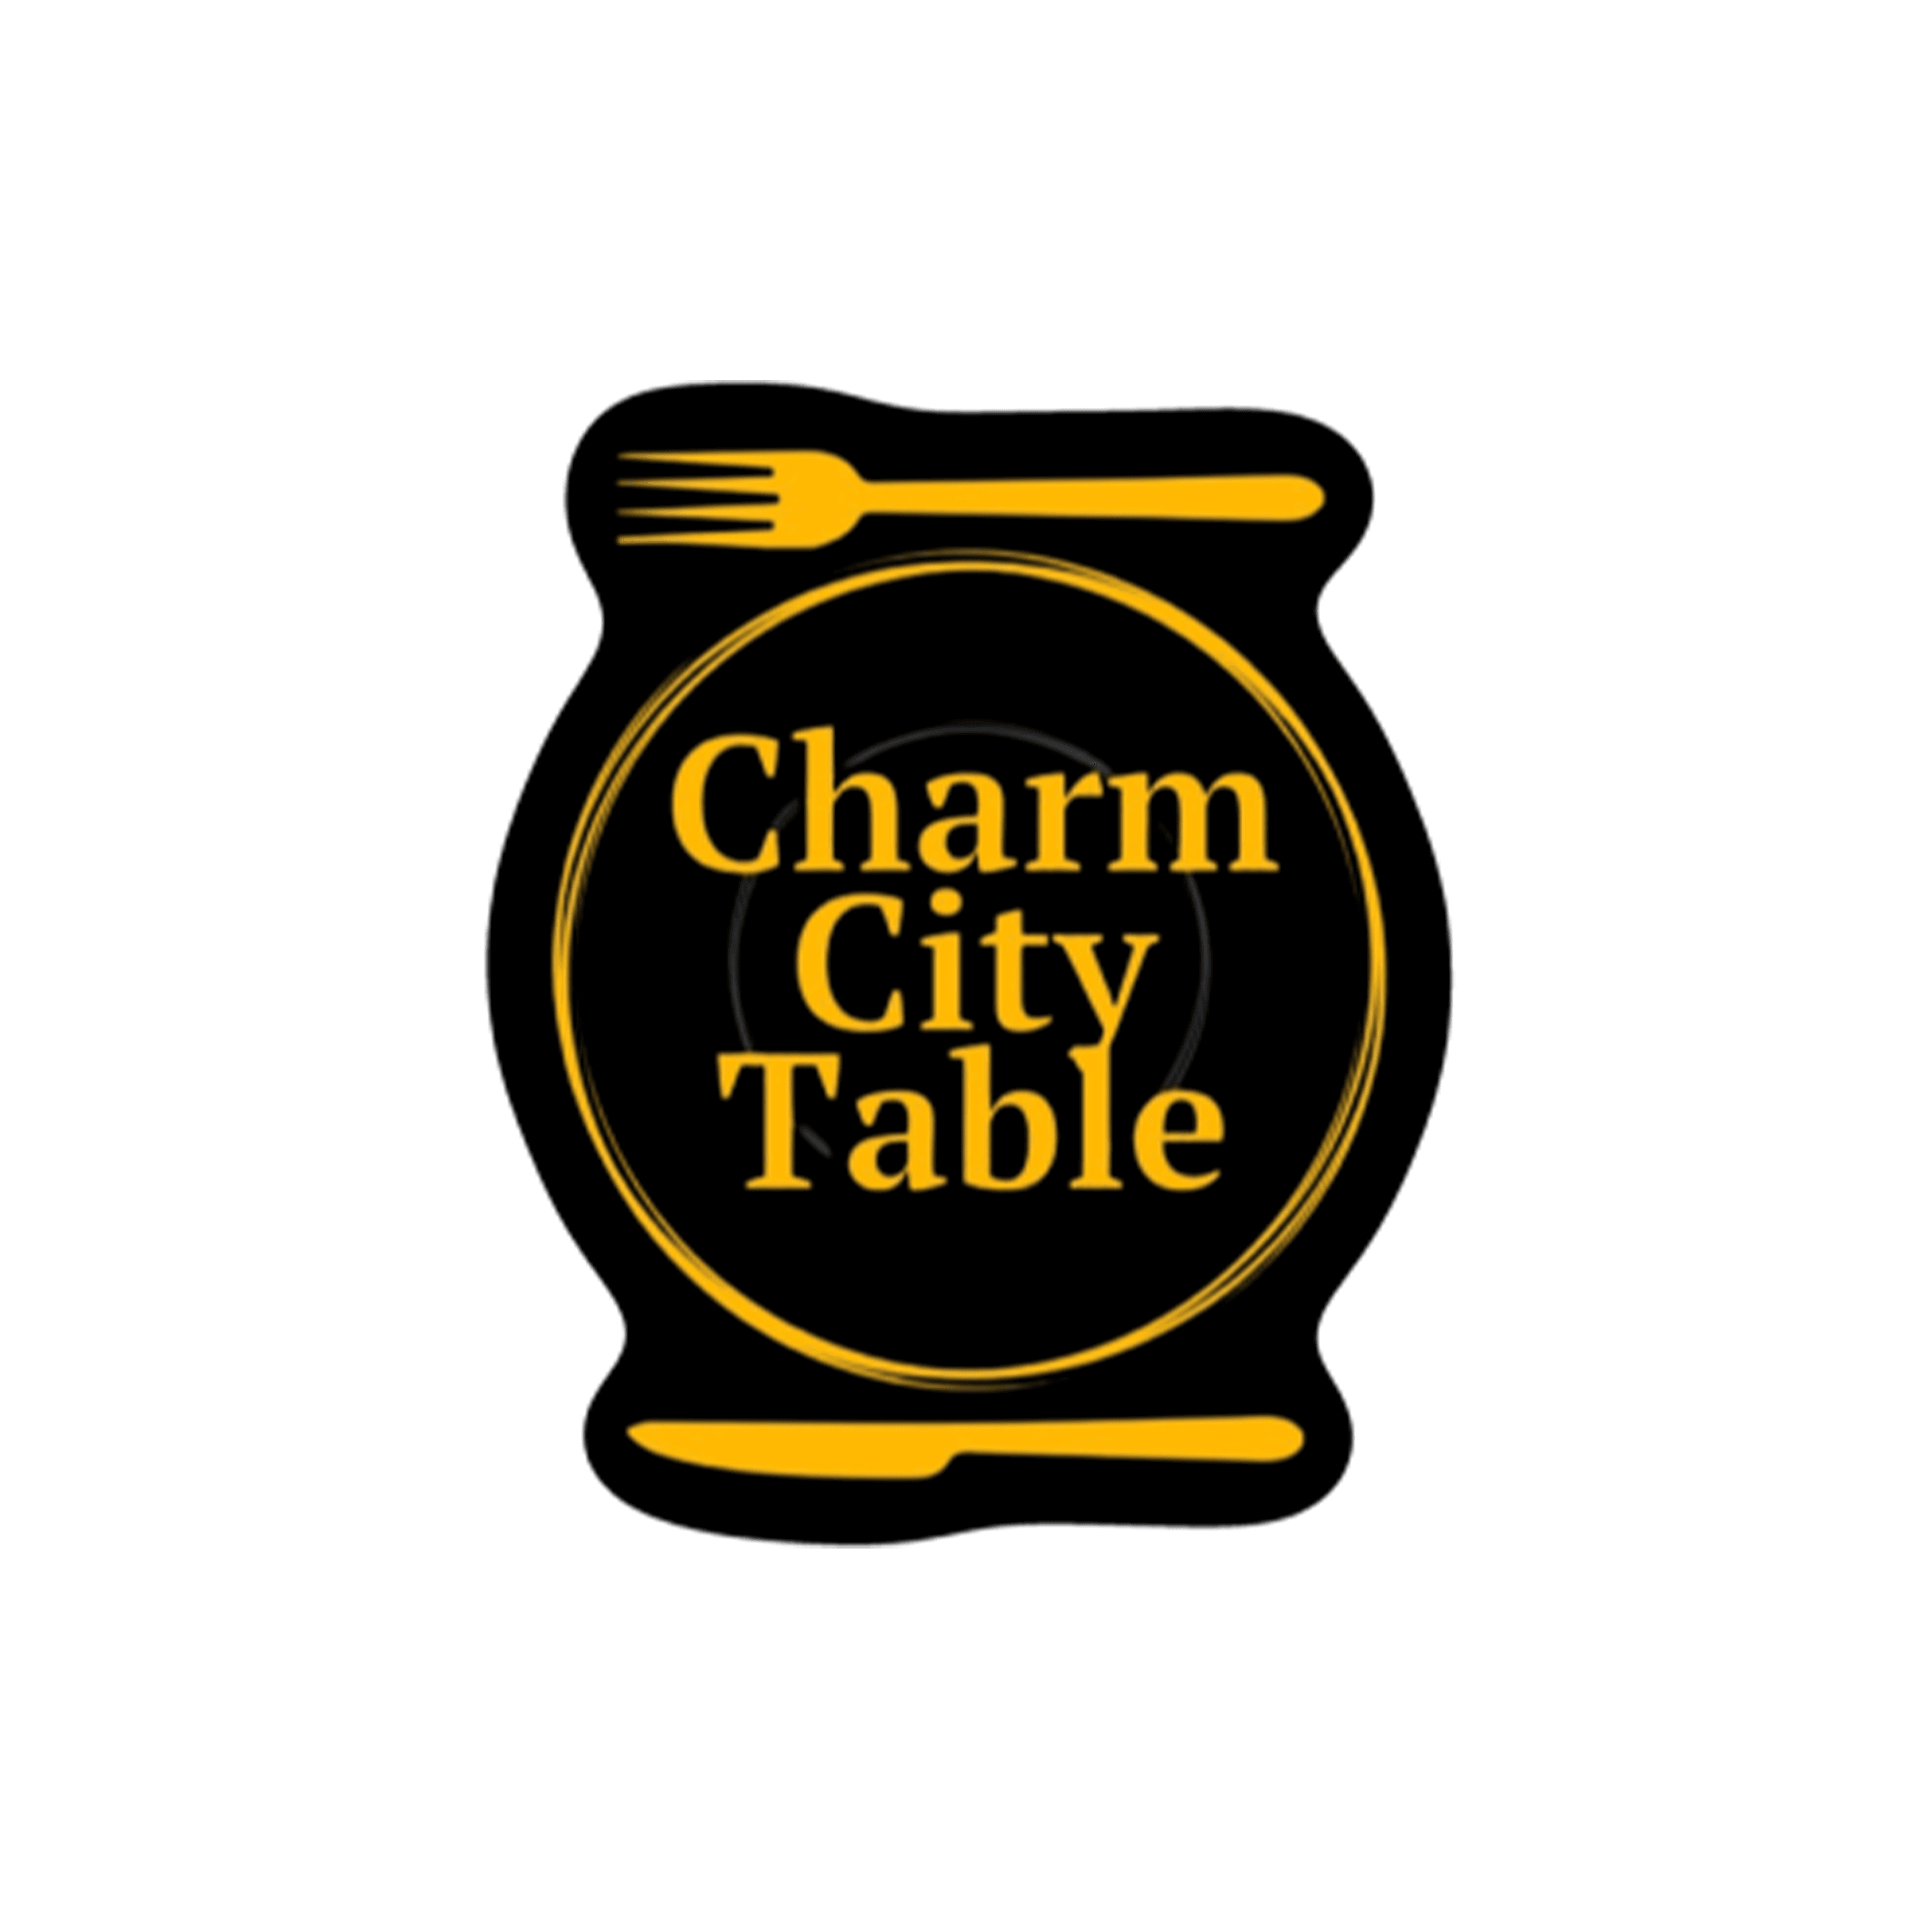 CHARM CITY TABLE